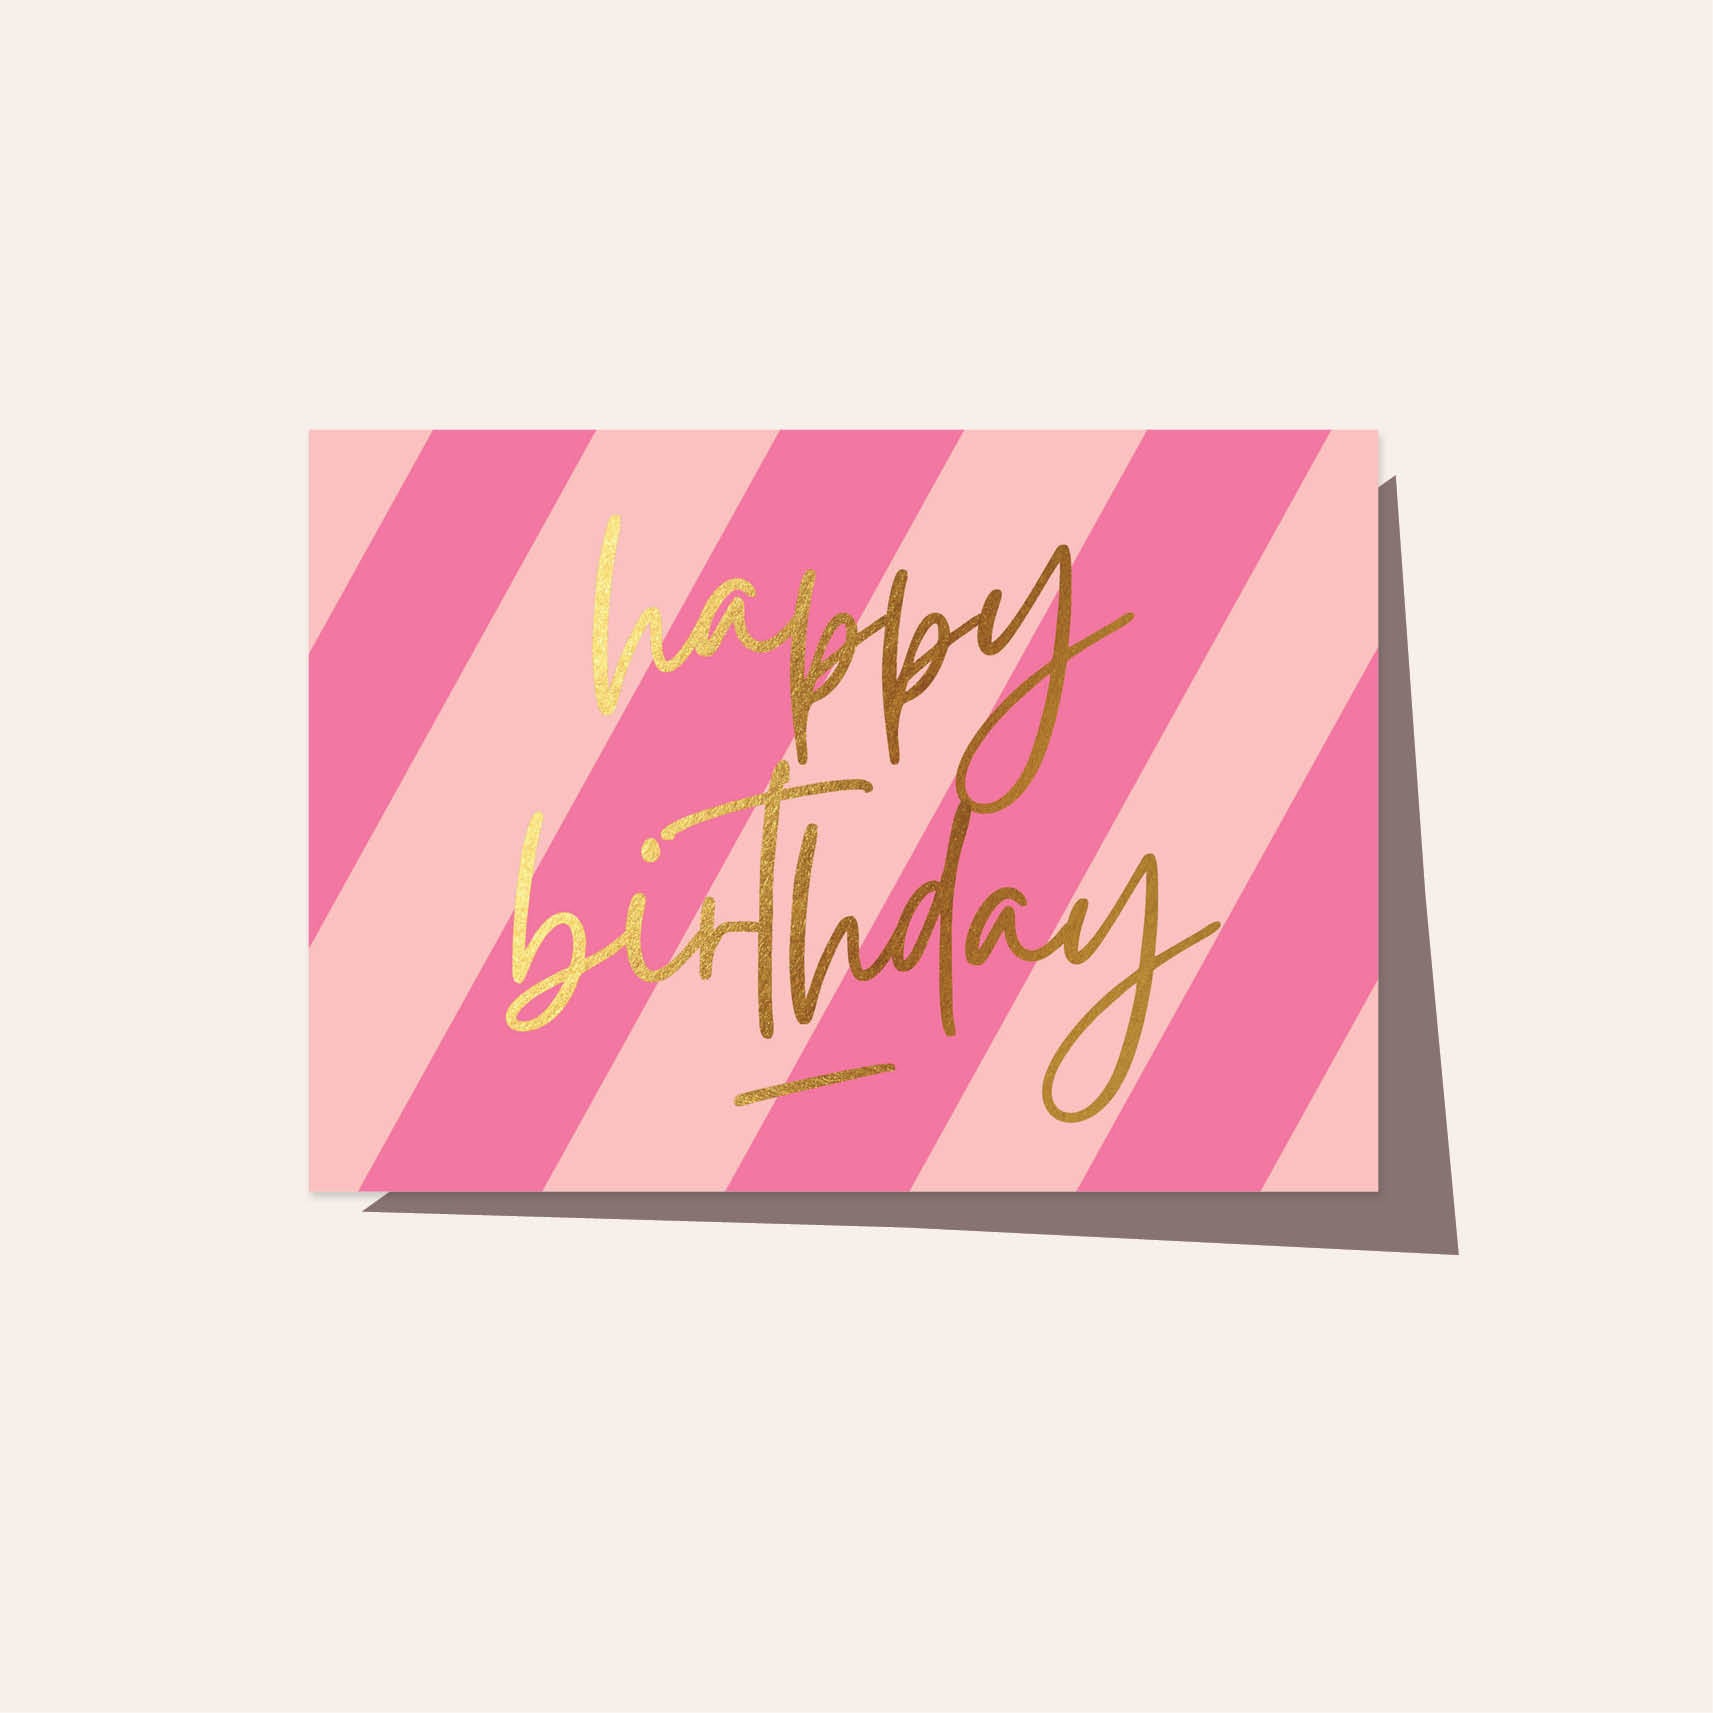 Pink Stripe Birthday